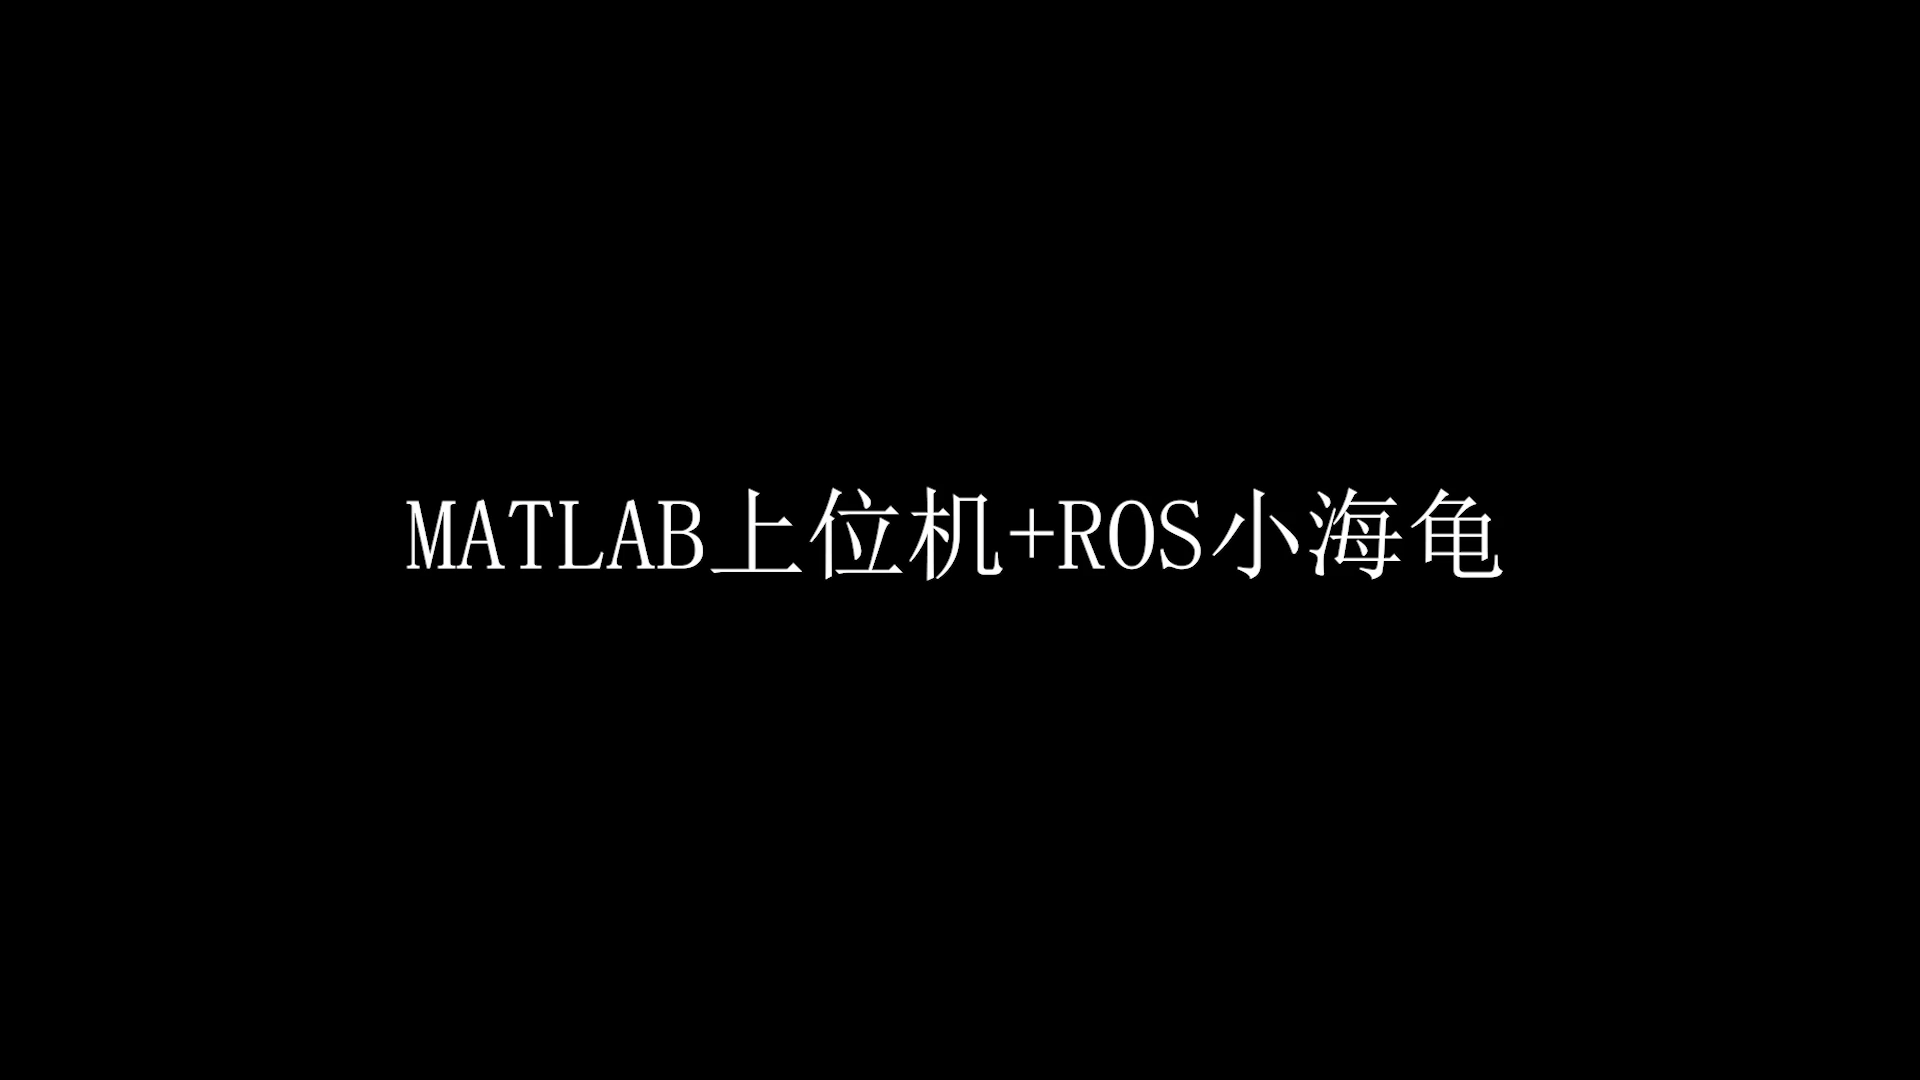 MATLAB+ROS小海龟